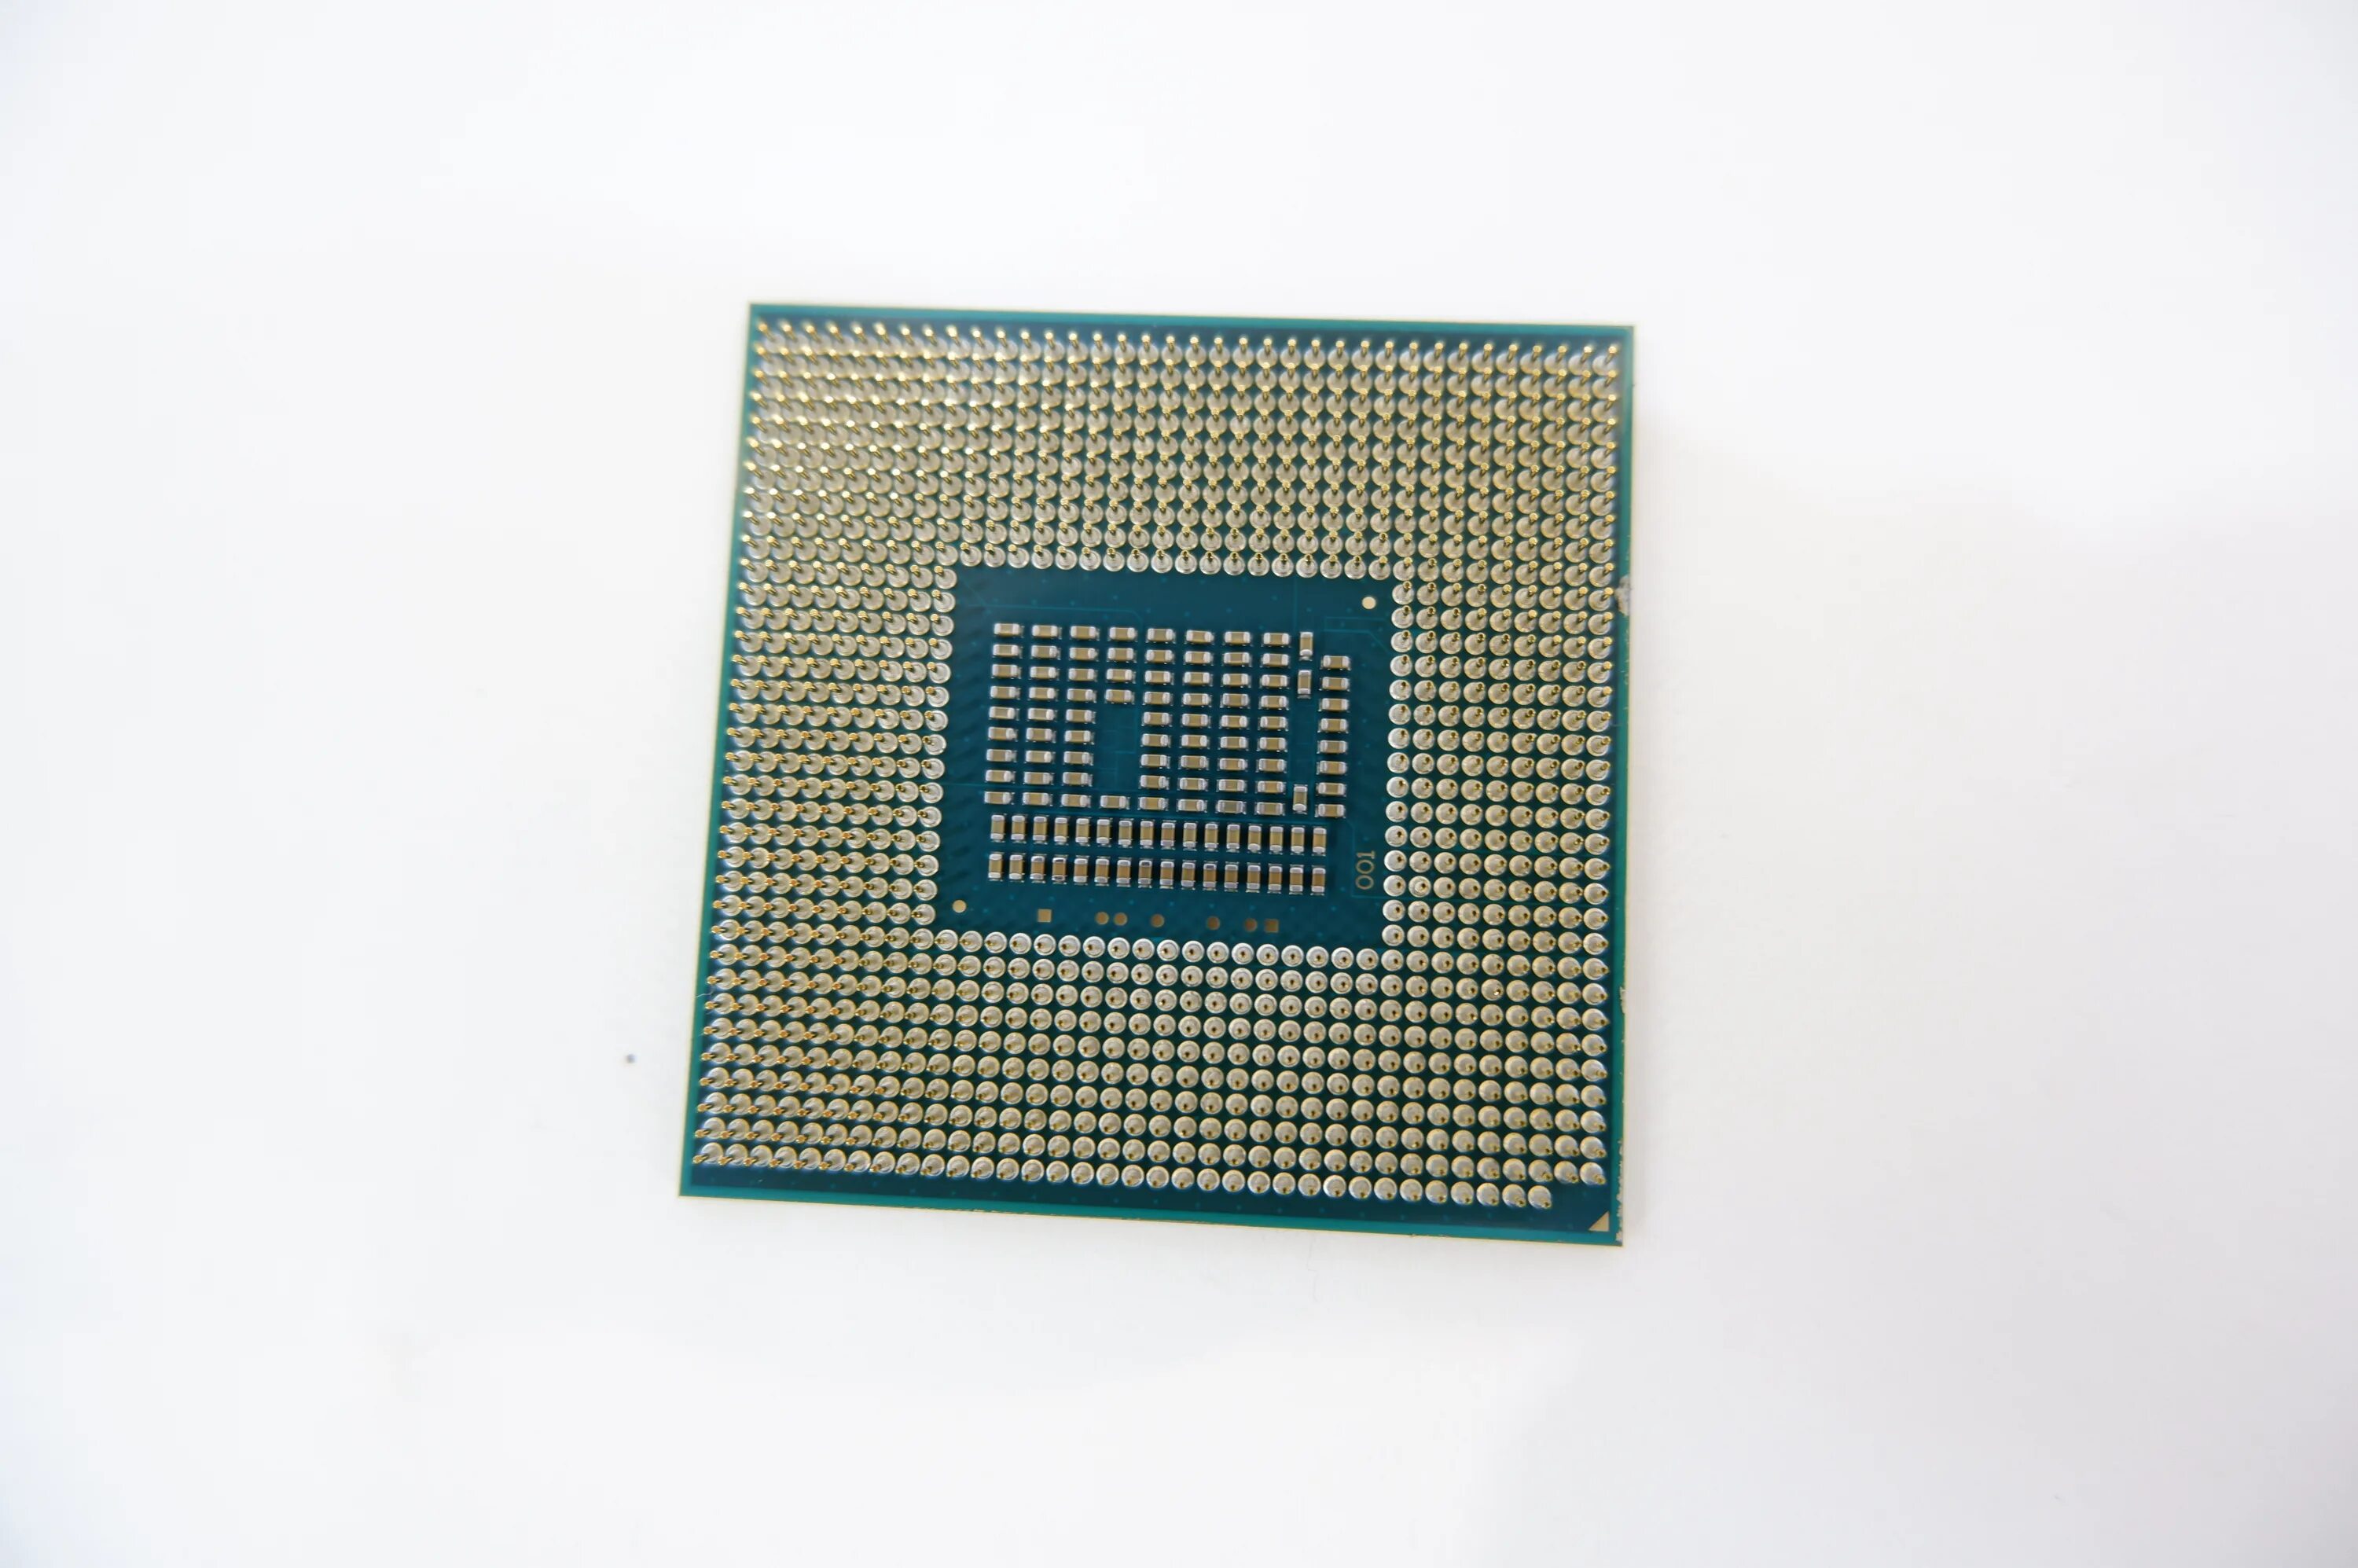 Intel Core i5 2410m FPO. Core i5-2410m. Intel Celeron b830. Sr0hr процессор. Сокет g2